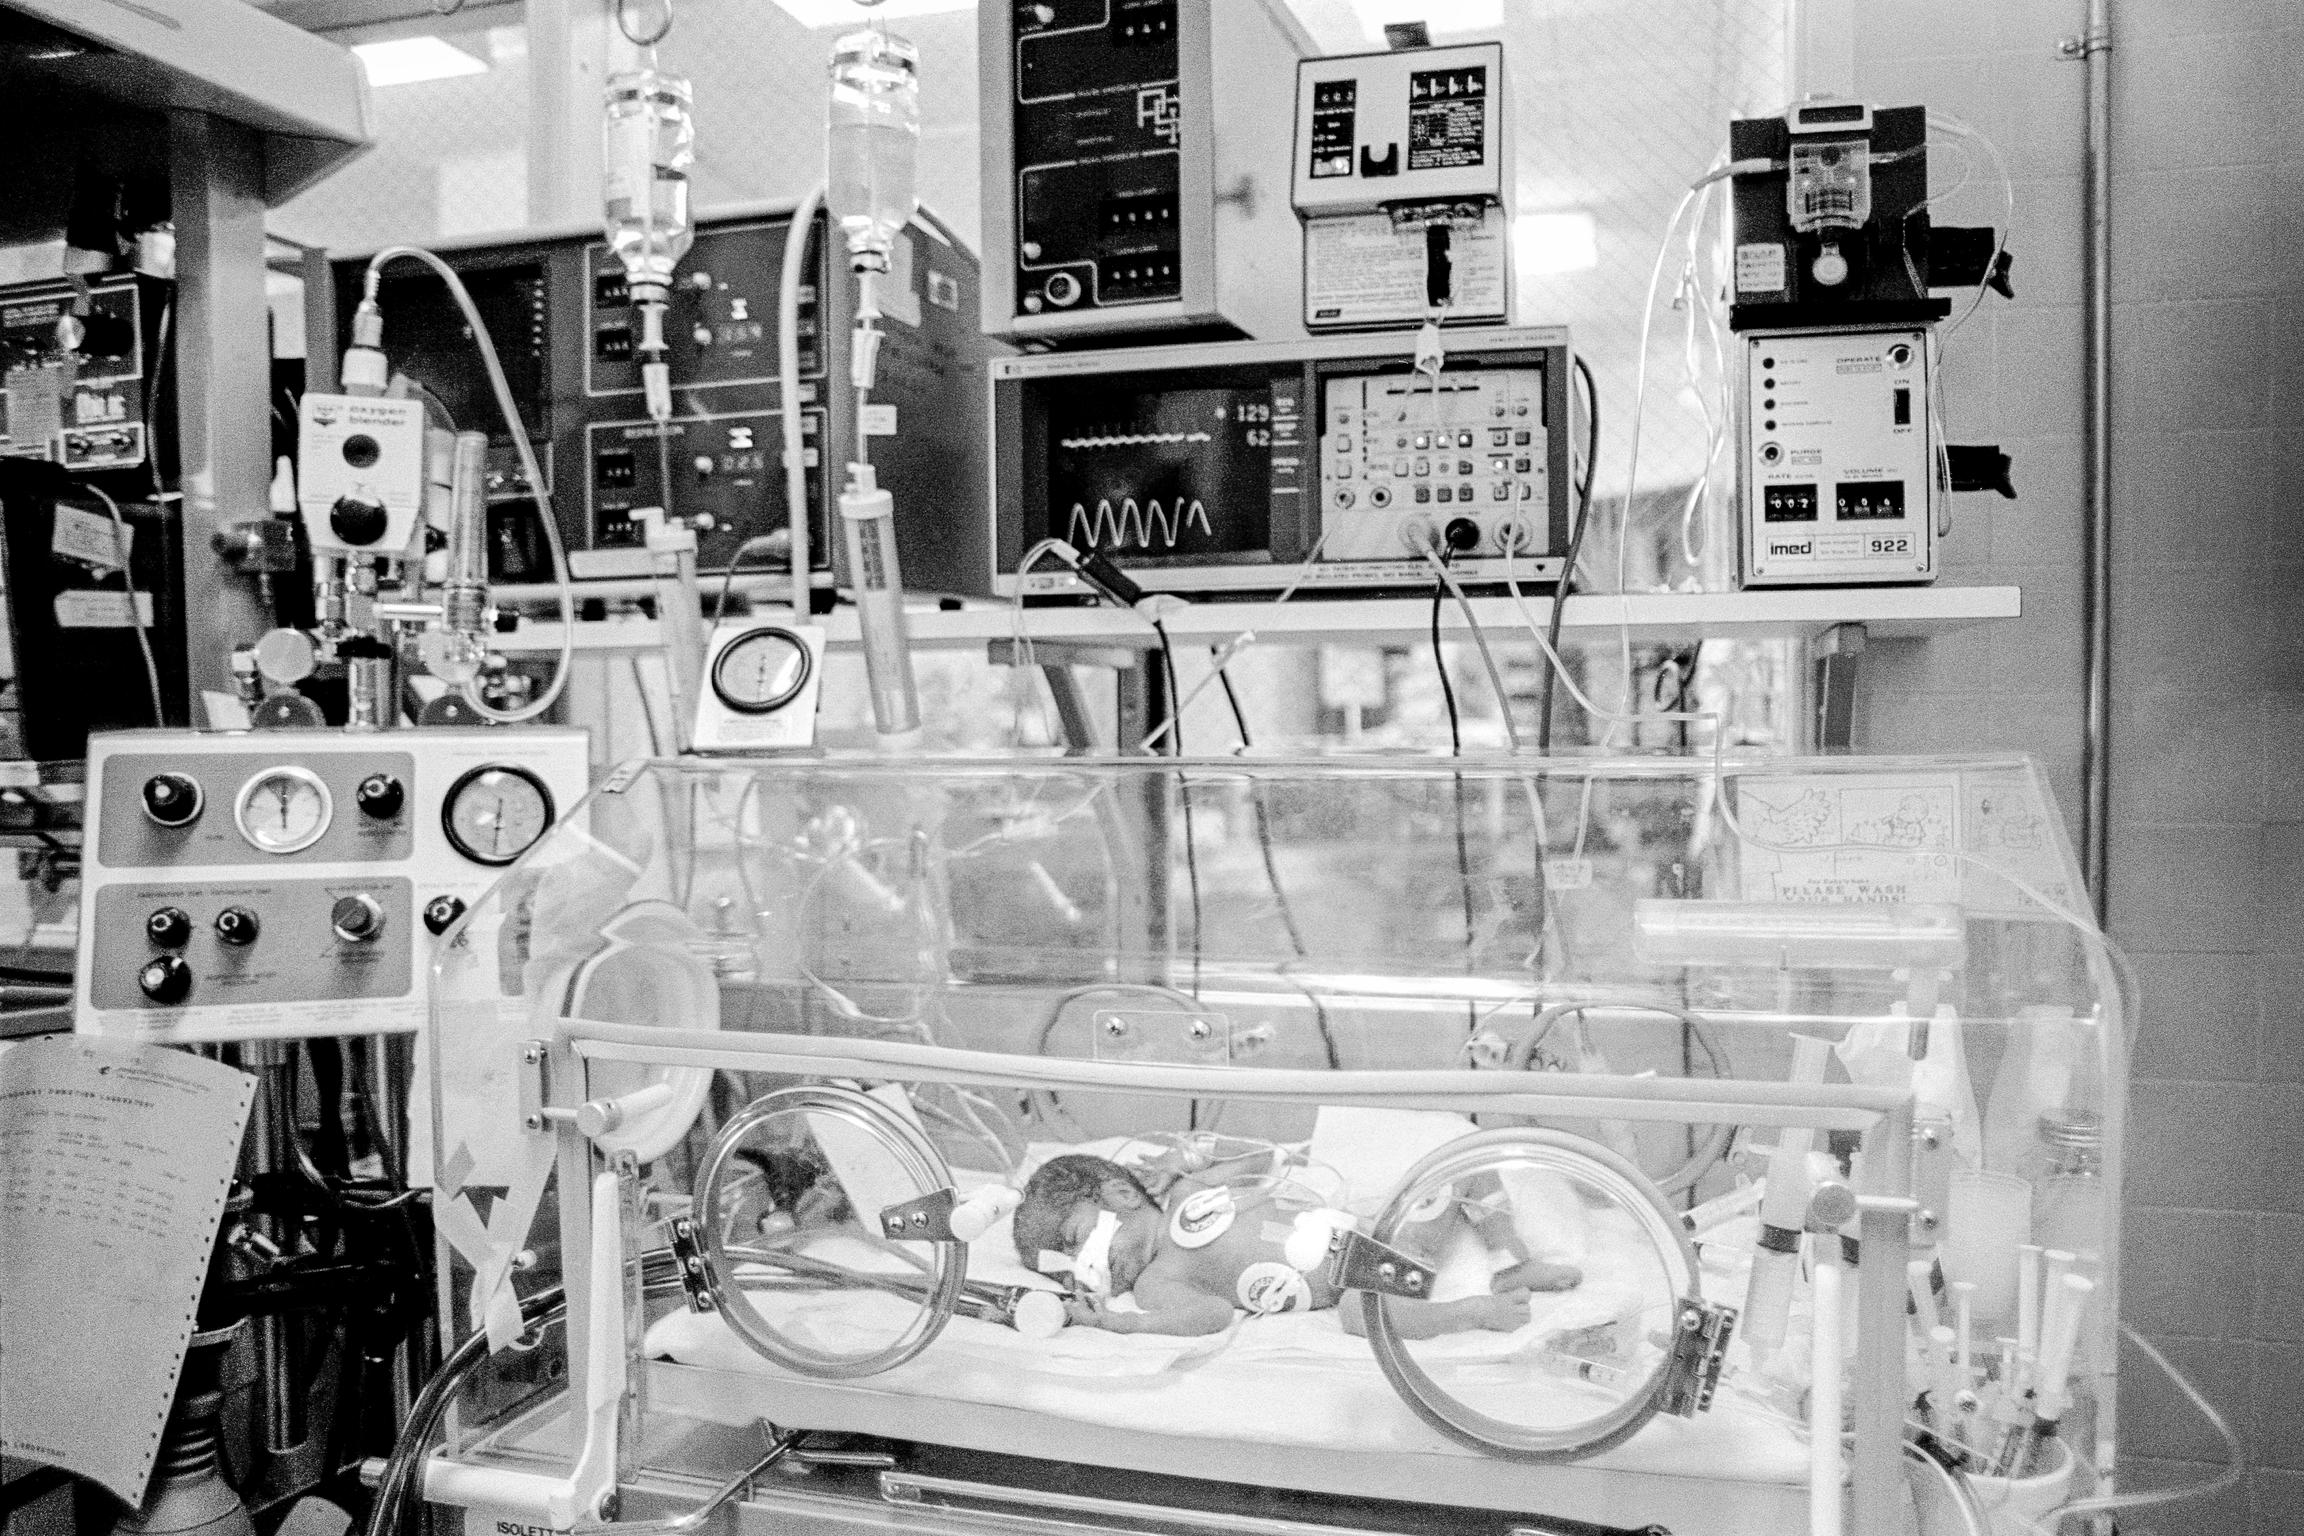 Preemie Baby unit at St Joseph's Hospital. I.C.U. Center. Phoenix, Arizona USA